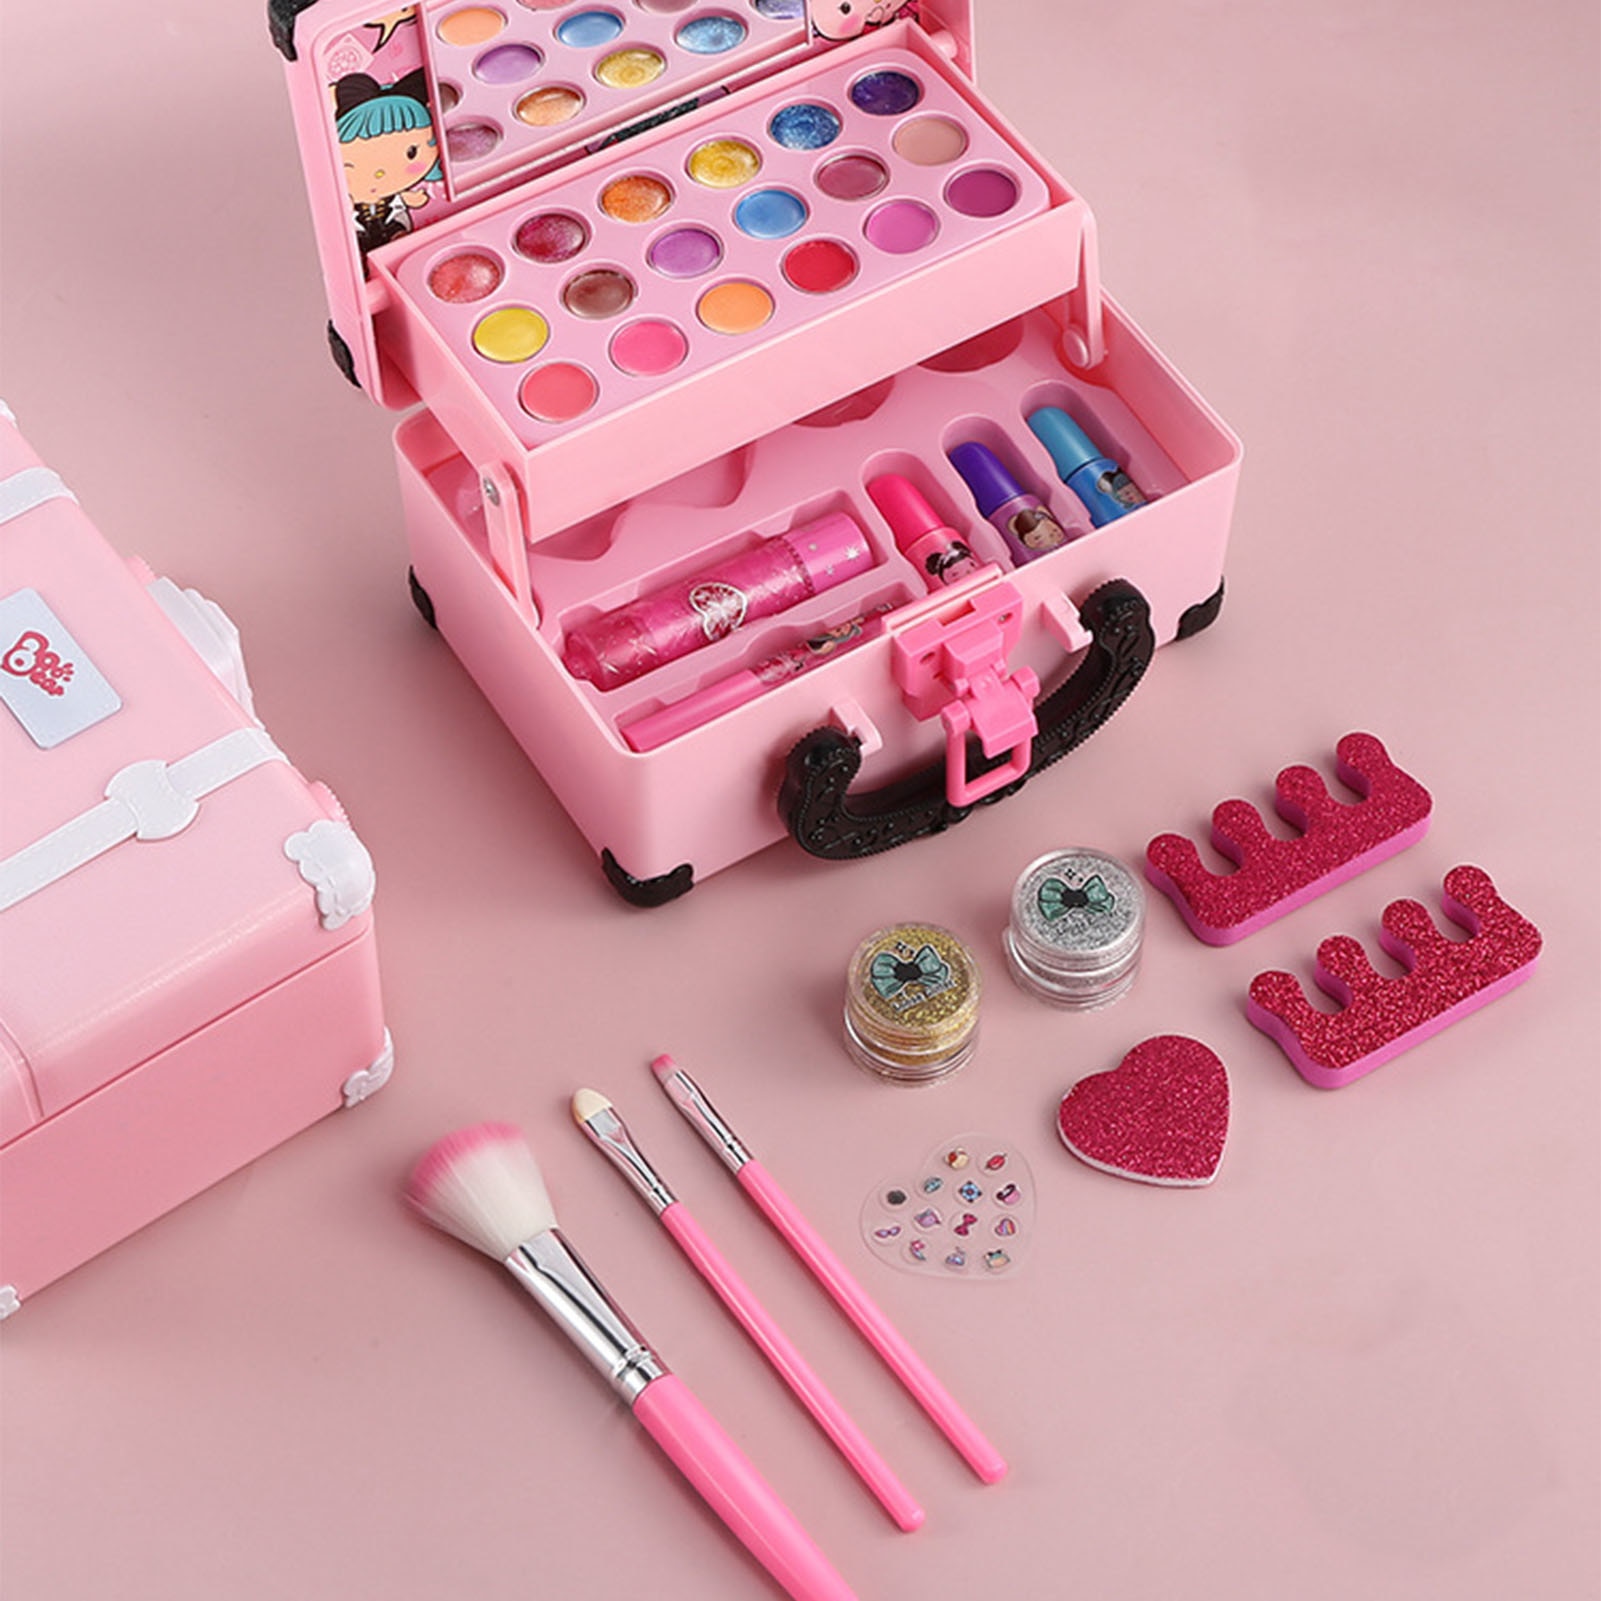 Children-Makeup-Set-Lipstick-Makeup-Pretend-Play-With-Toys-Cosmetic-Educational-Toys-Girl-Princess-Makeup-Toy-1